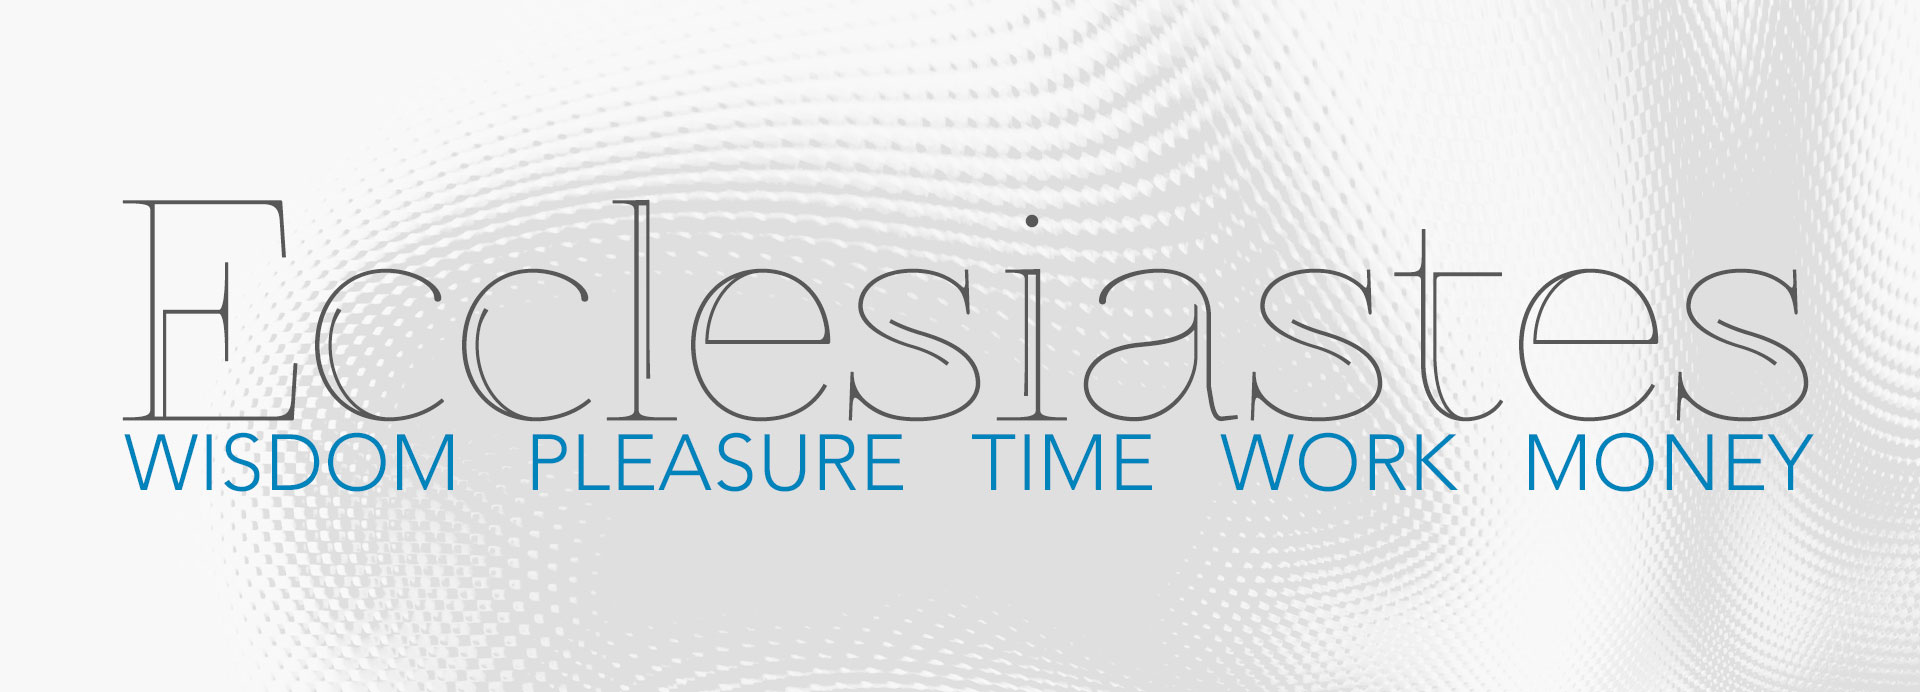 Ecclesiastes-App-Image-Banner.jpg